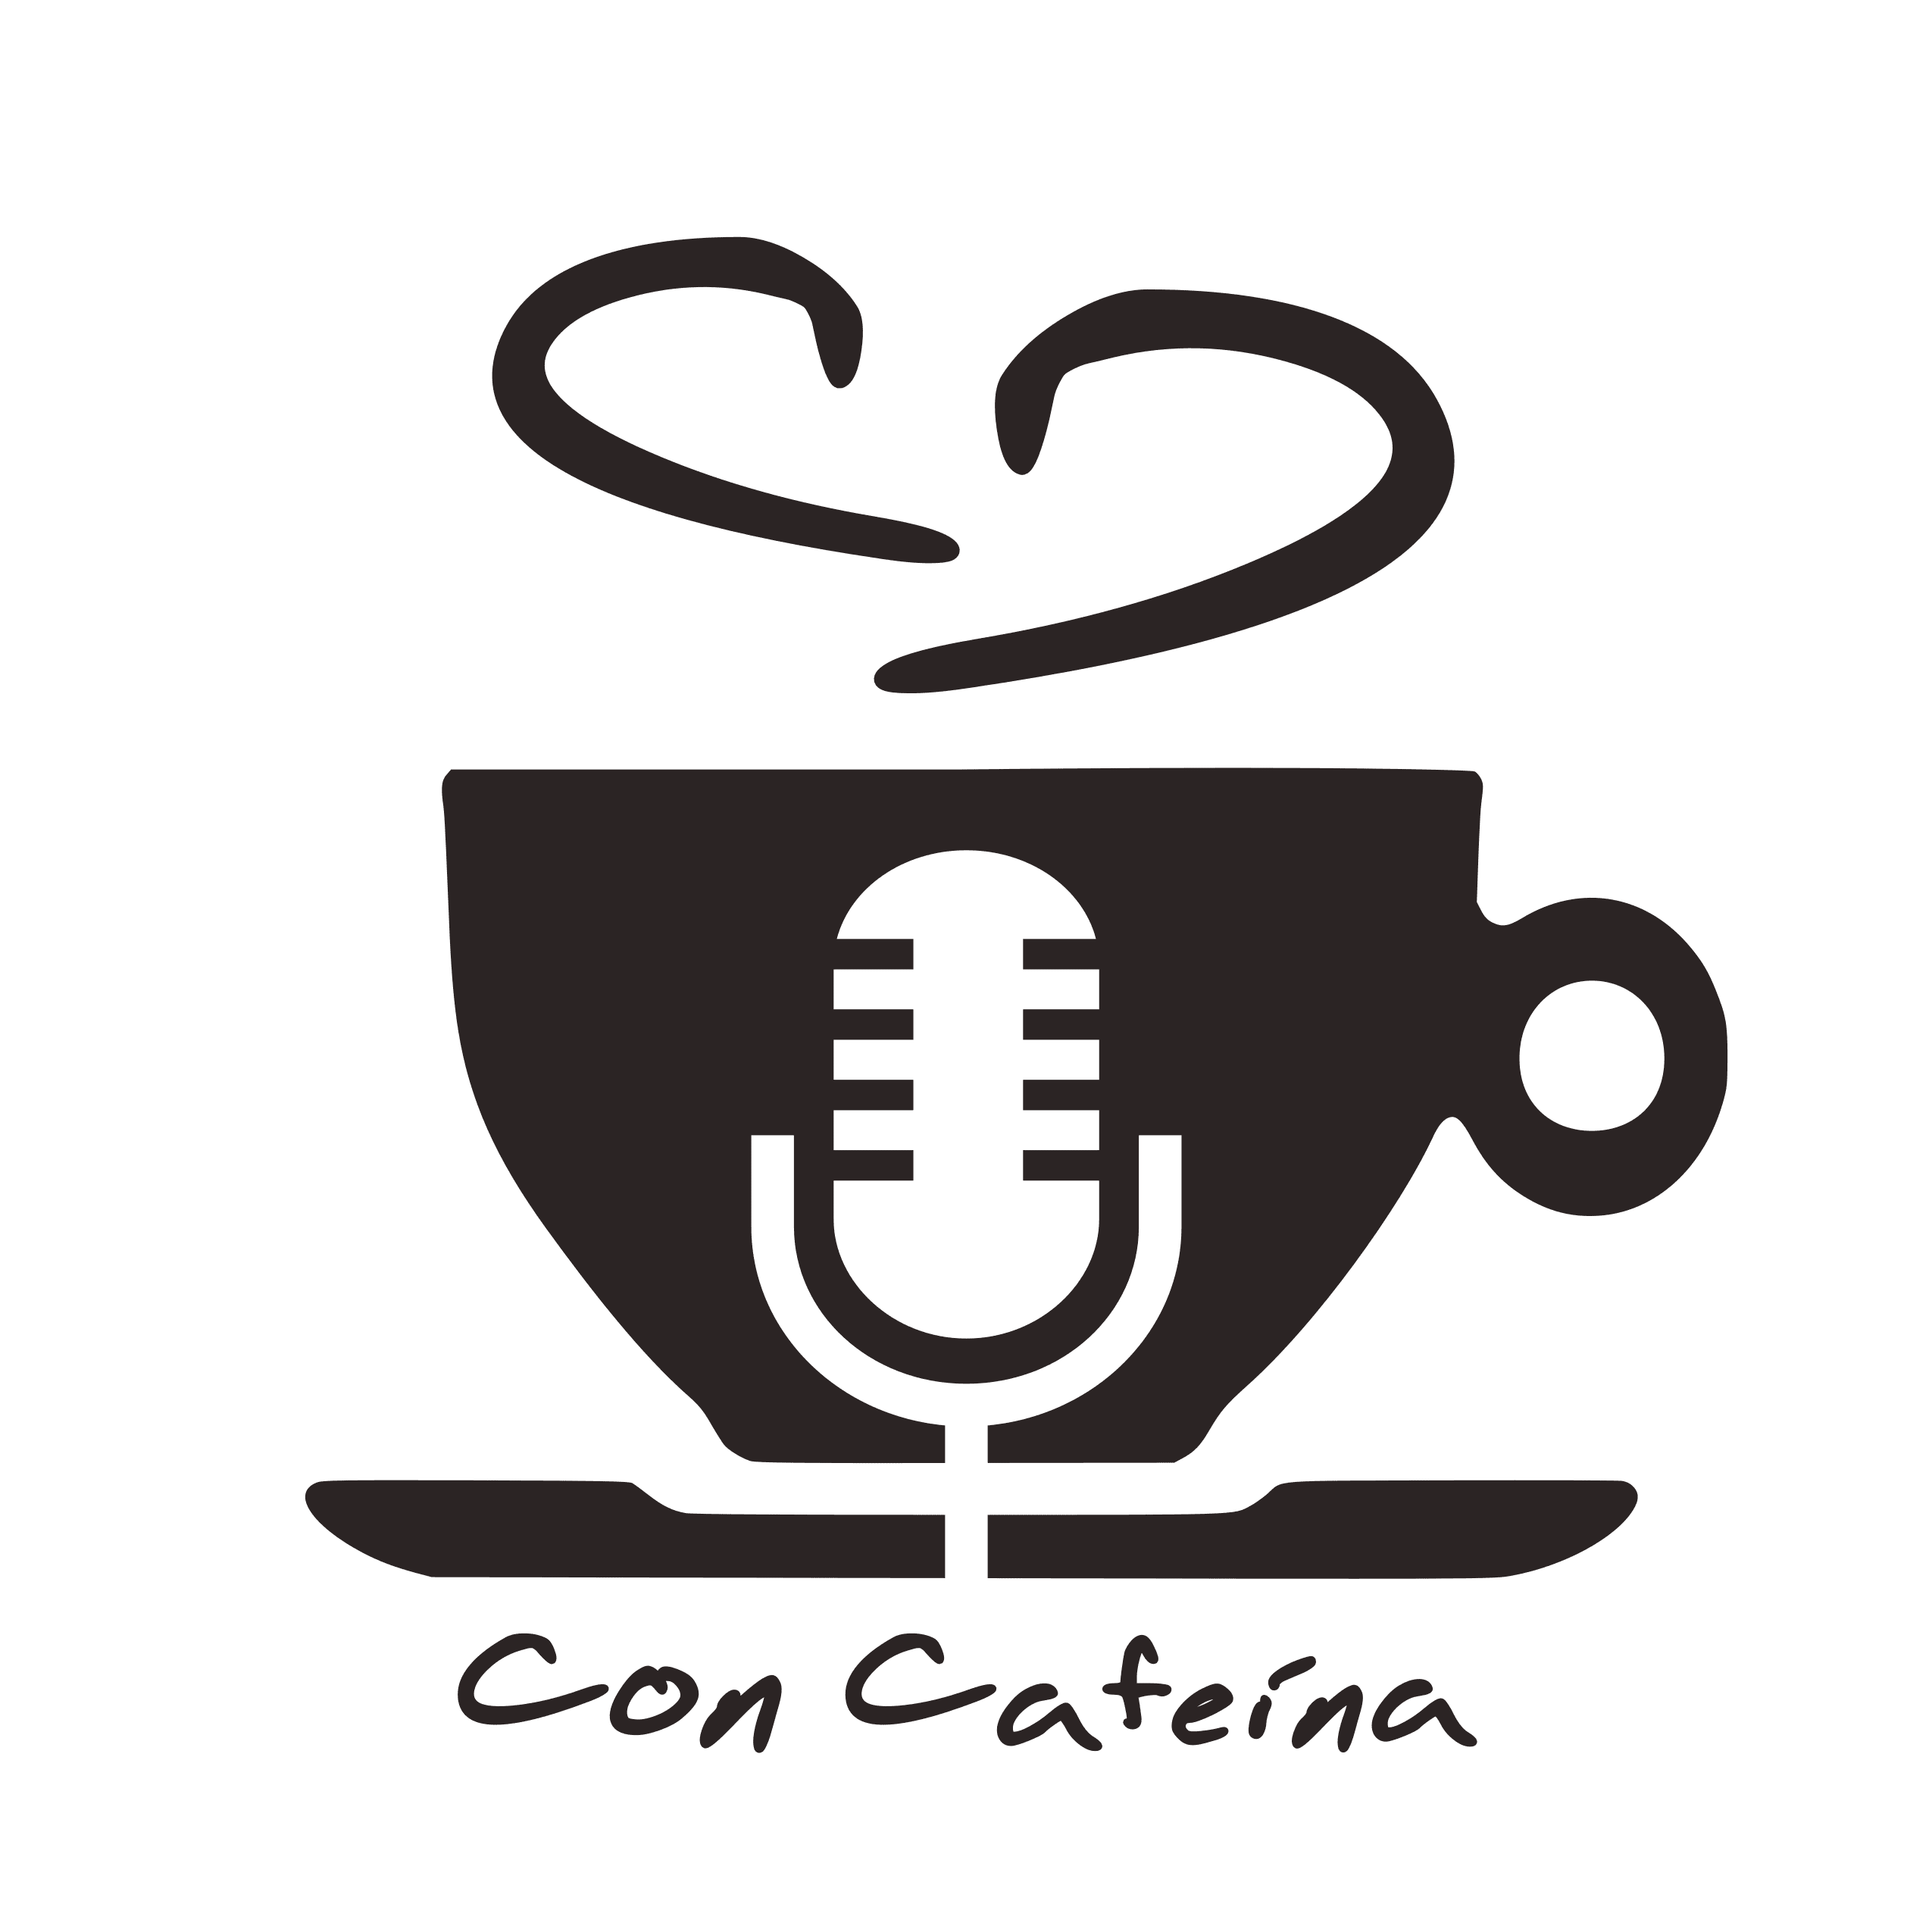 ConCafeína Podcast Logo